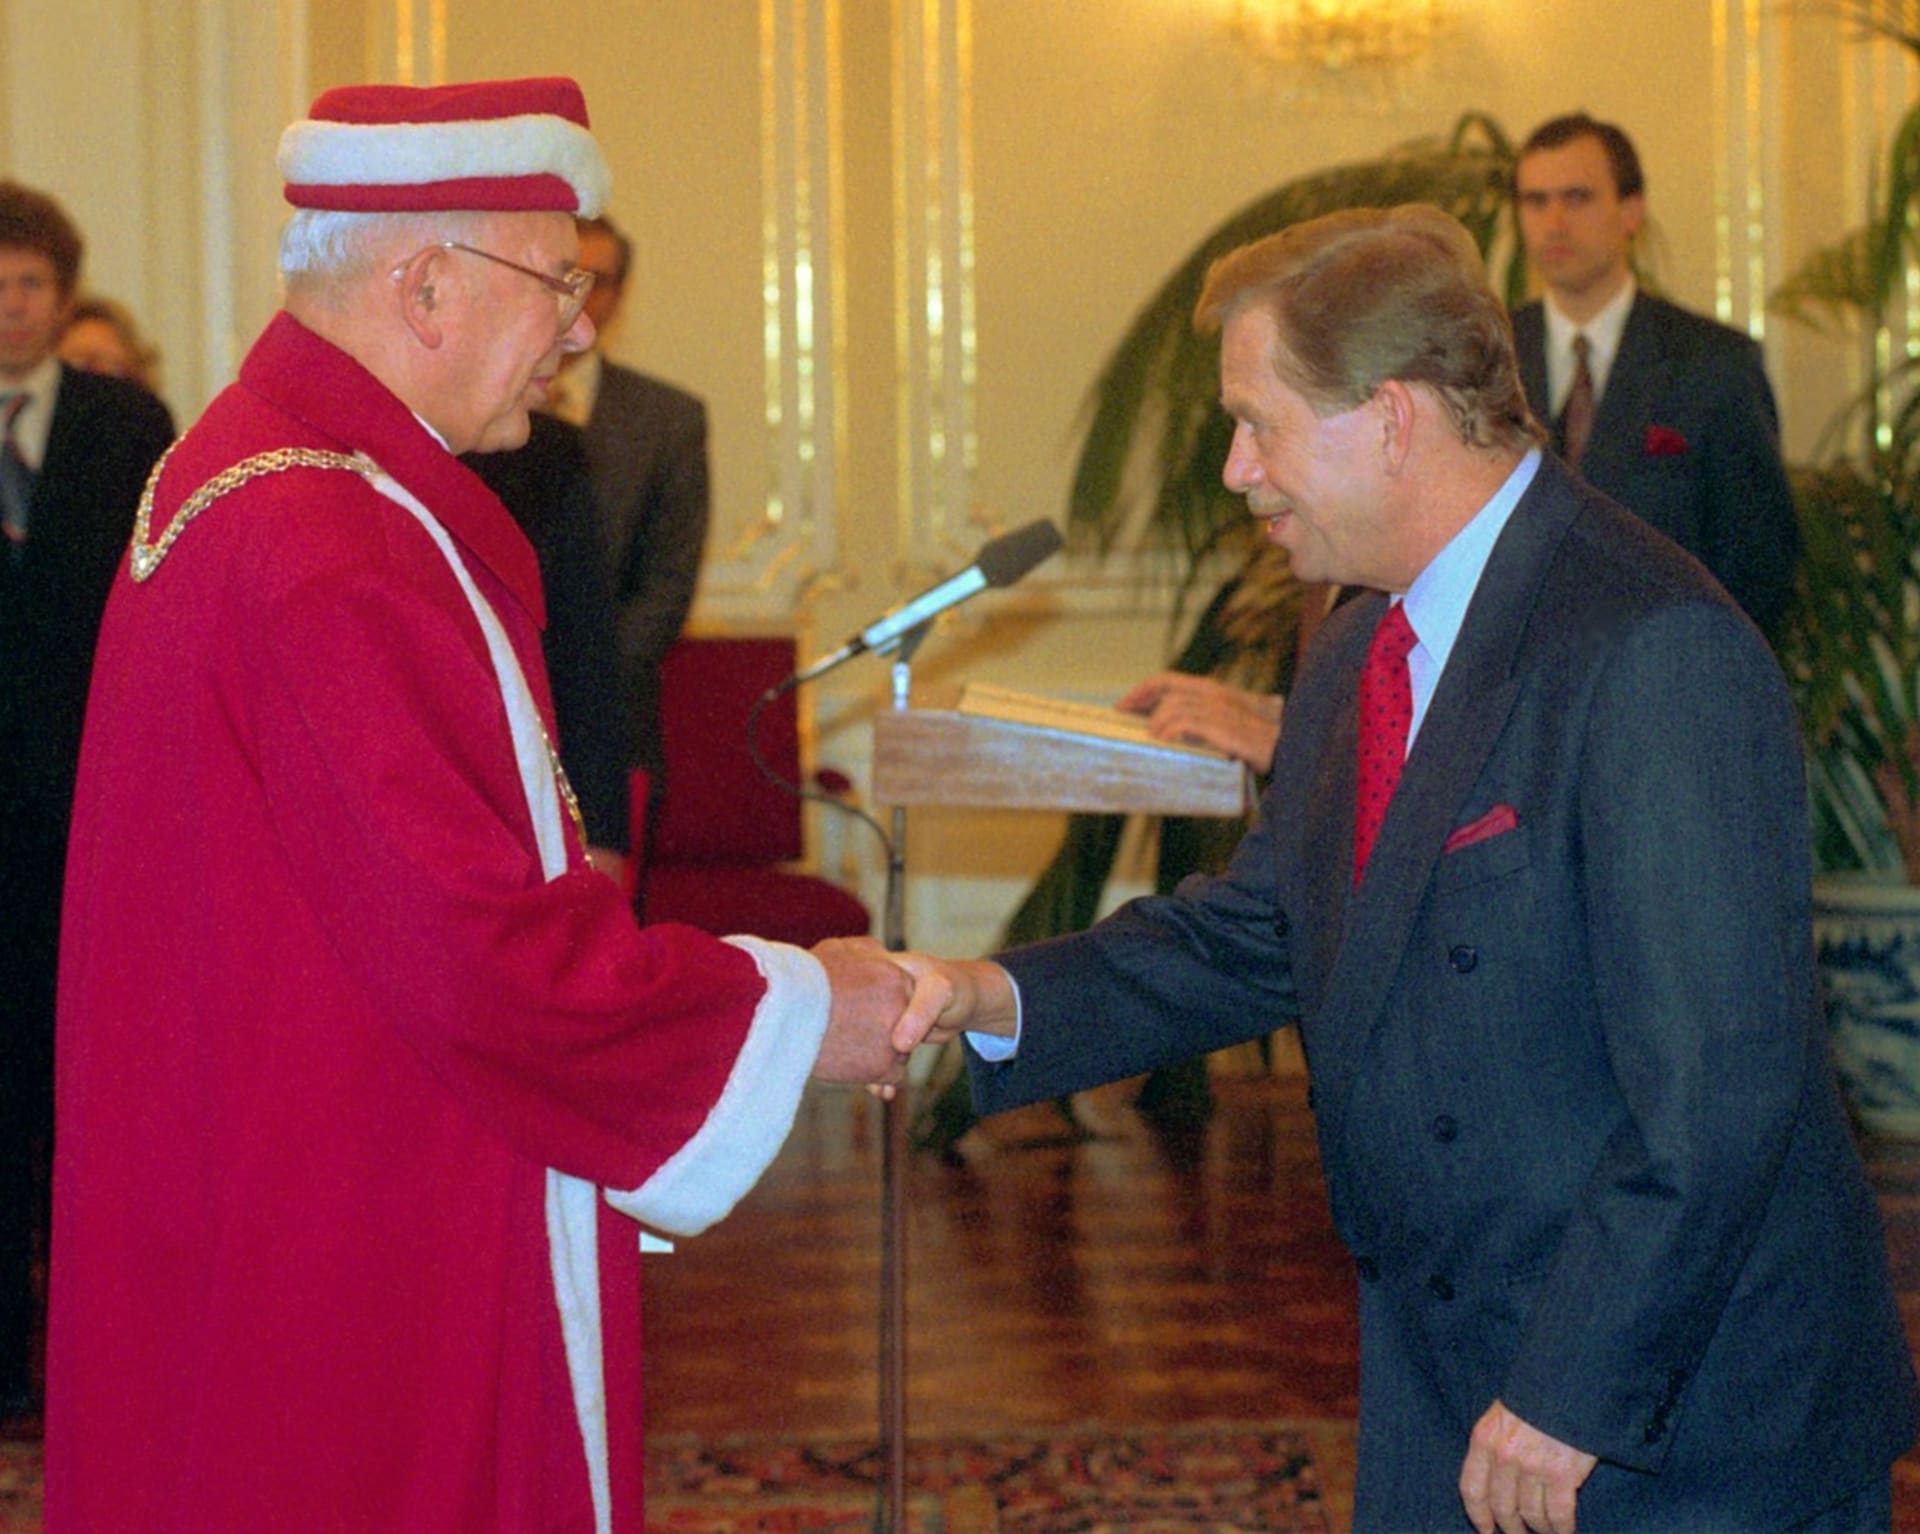 Černohorského jmenoval do funkce rektora prezident Václav Havel v roce 1995